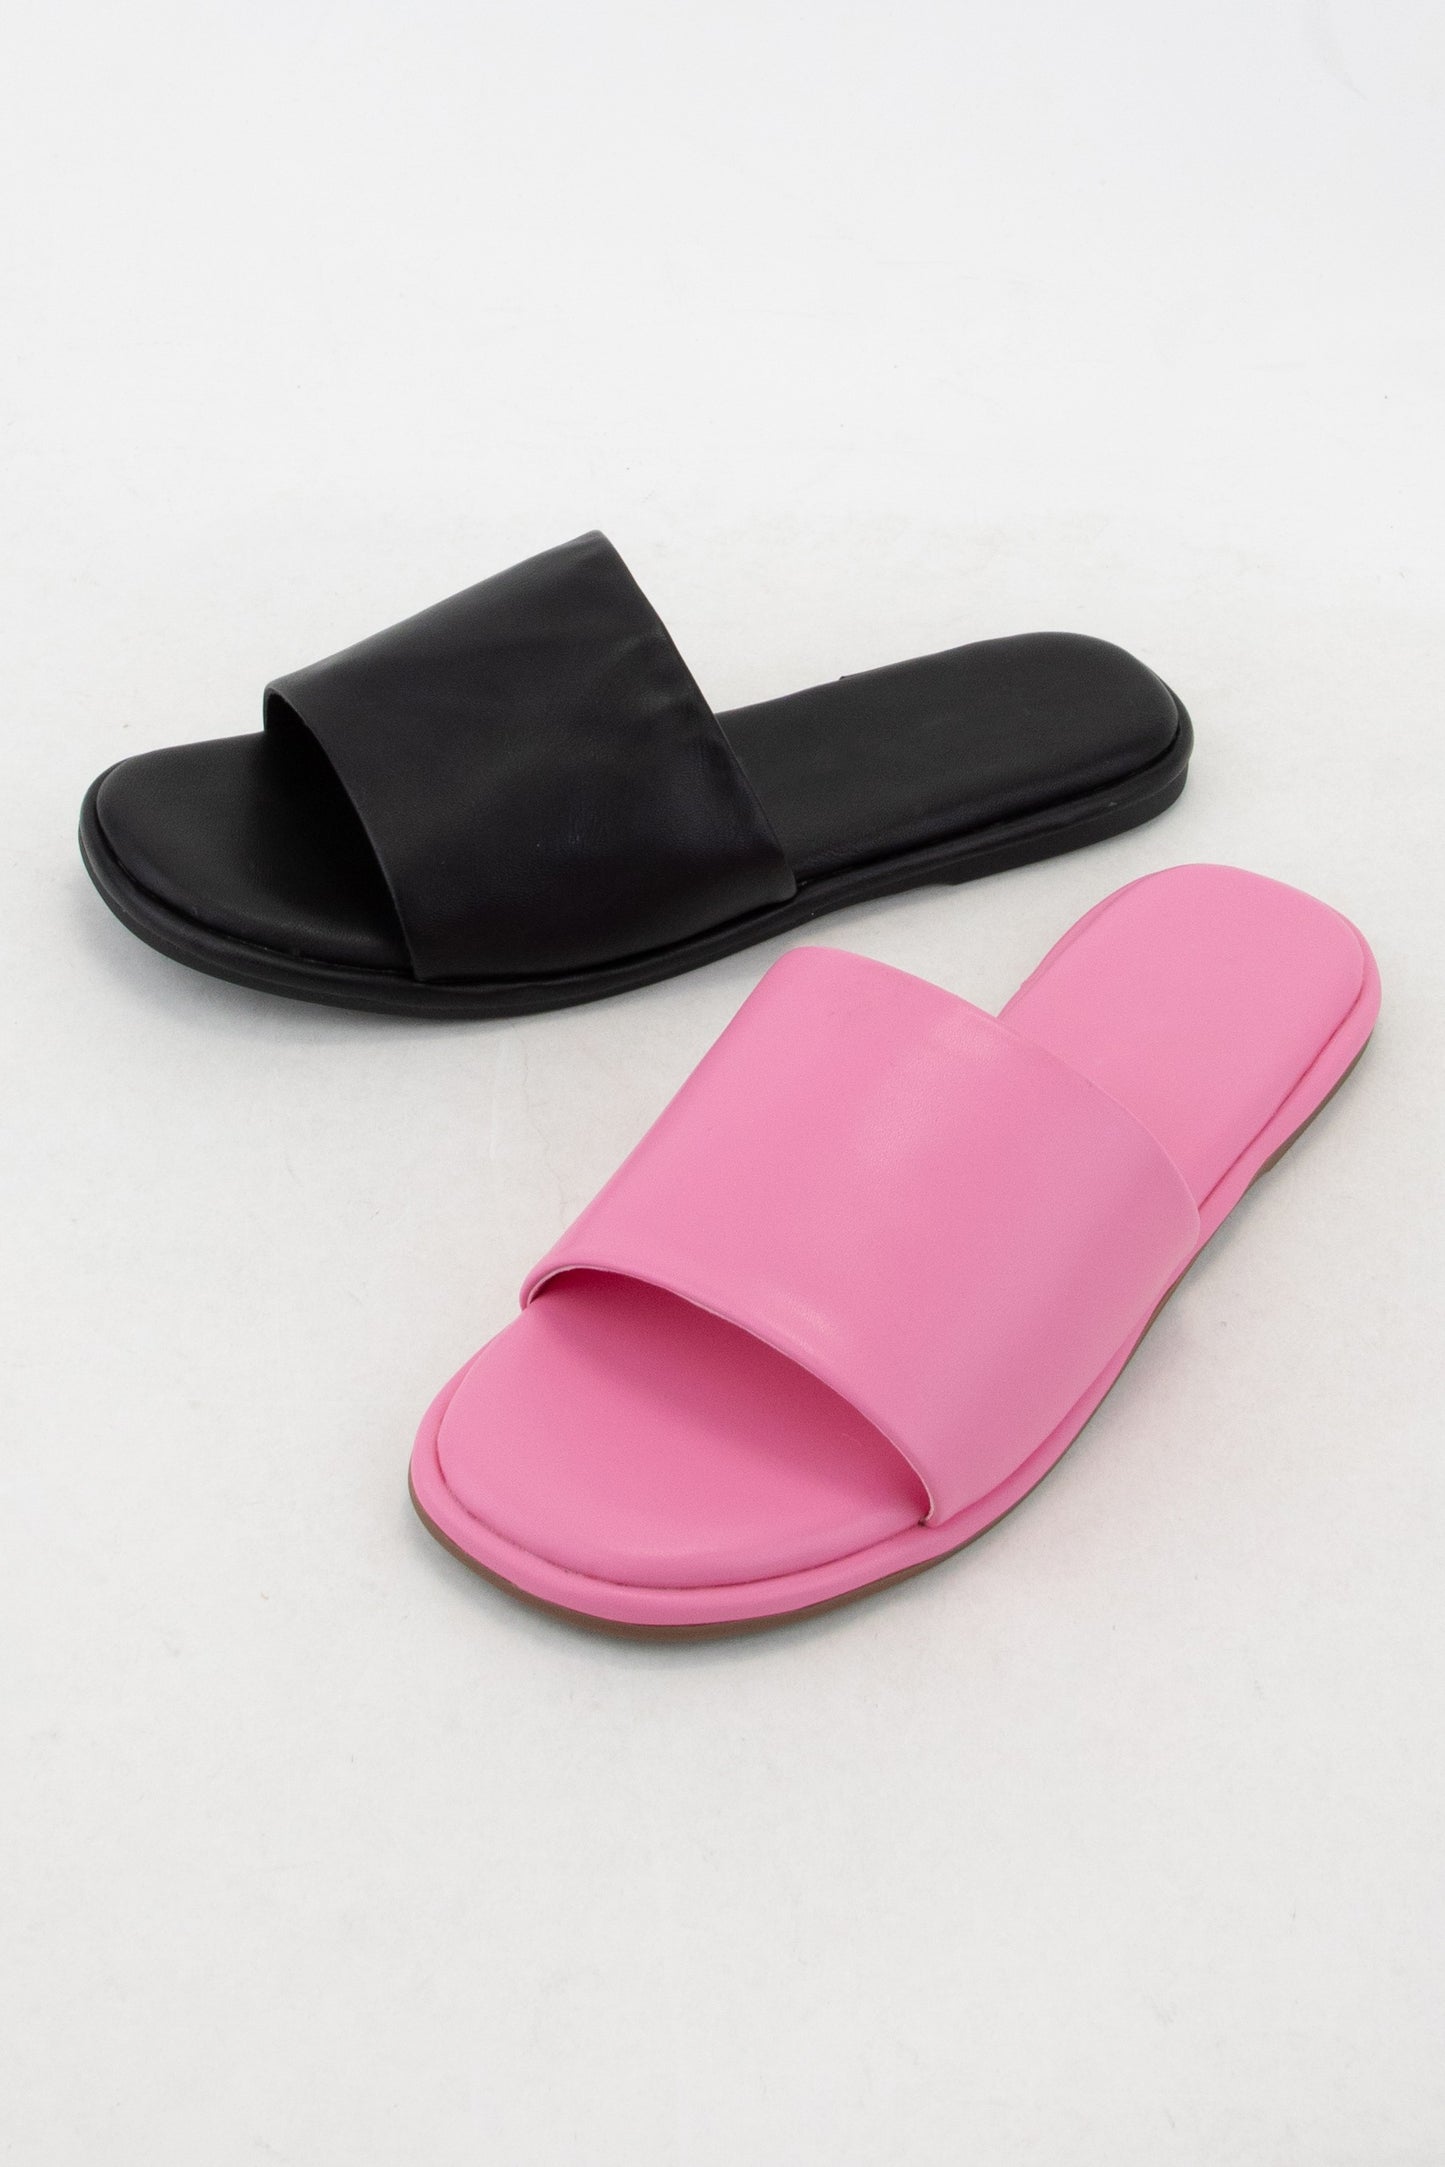 Padded Sole Pink Slides